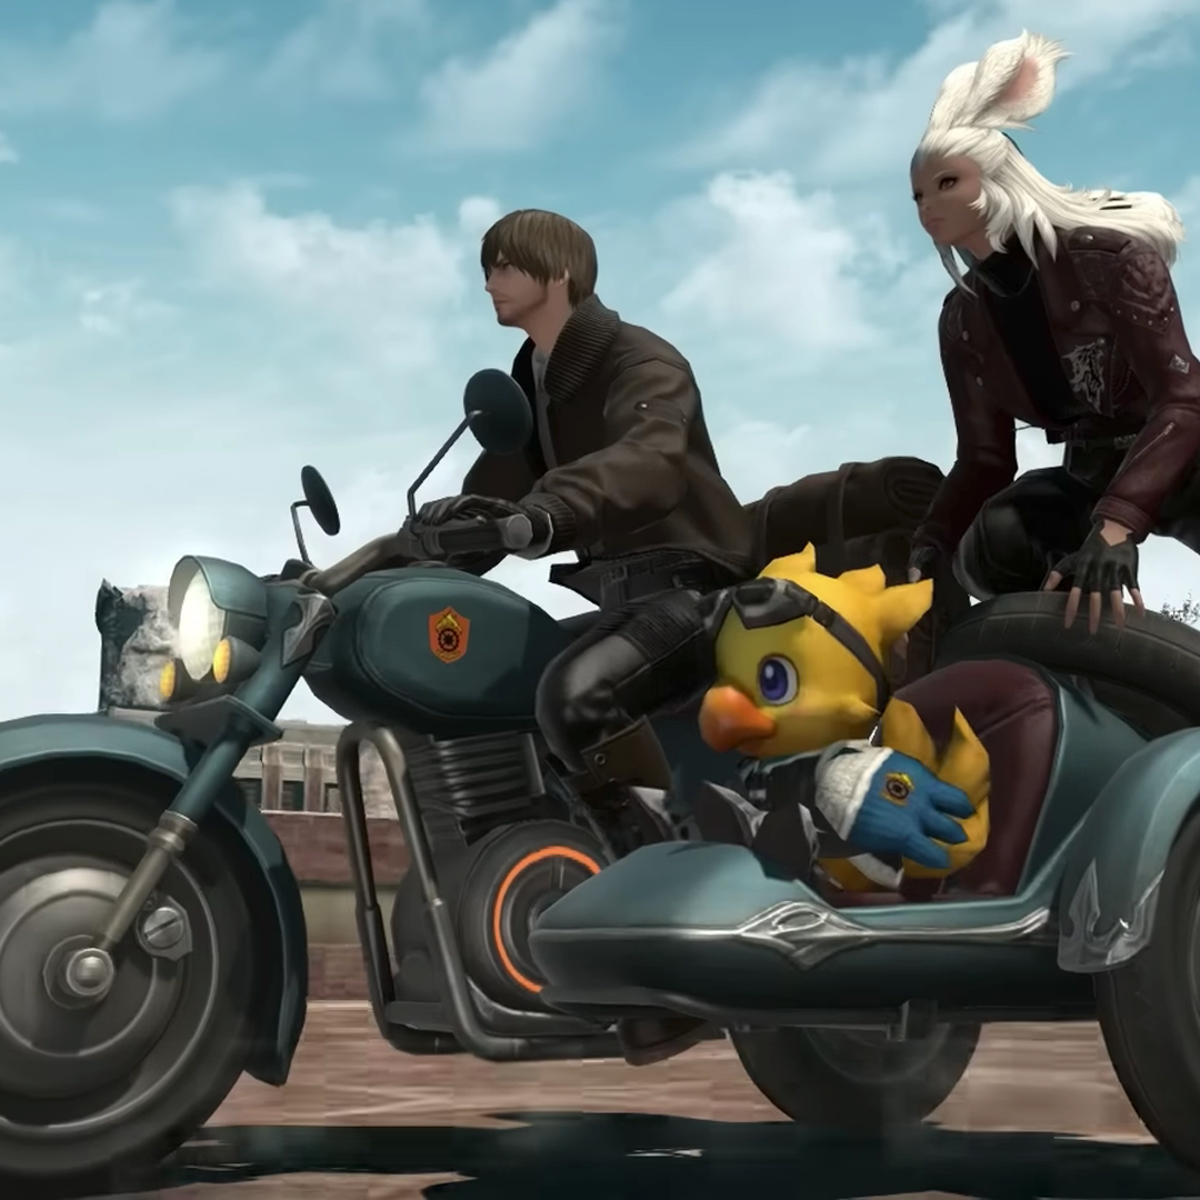 Final Fantasy 14's new motorcycle mount has its adorable chocobo ride  shotgun